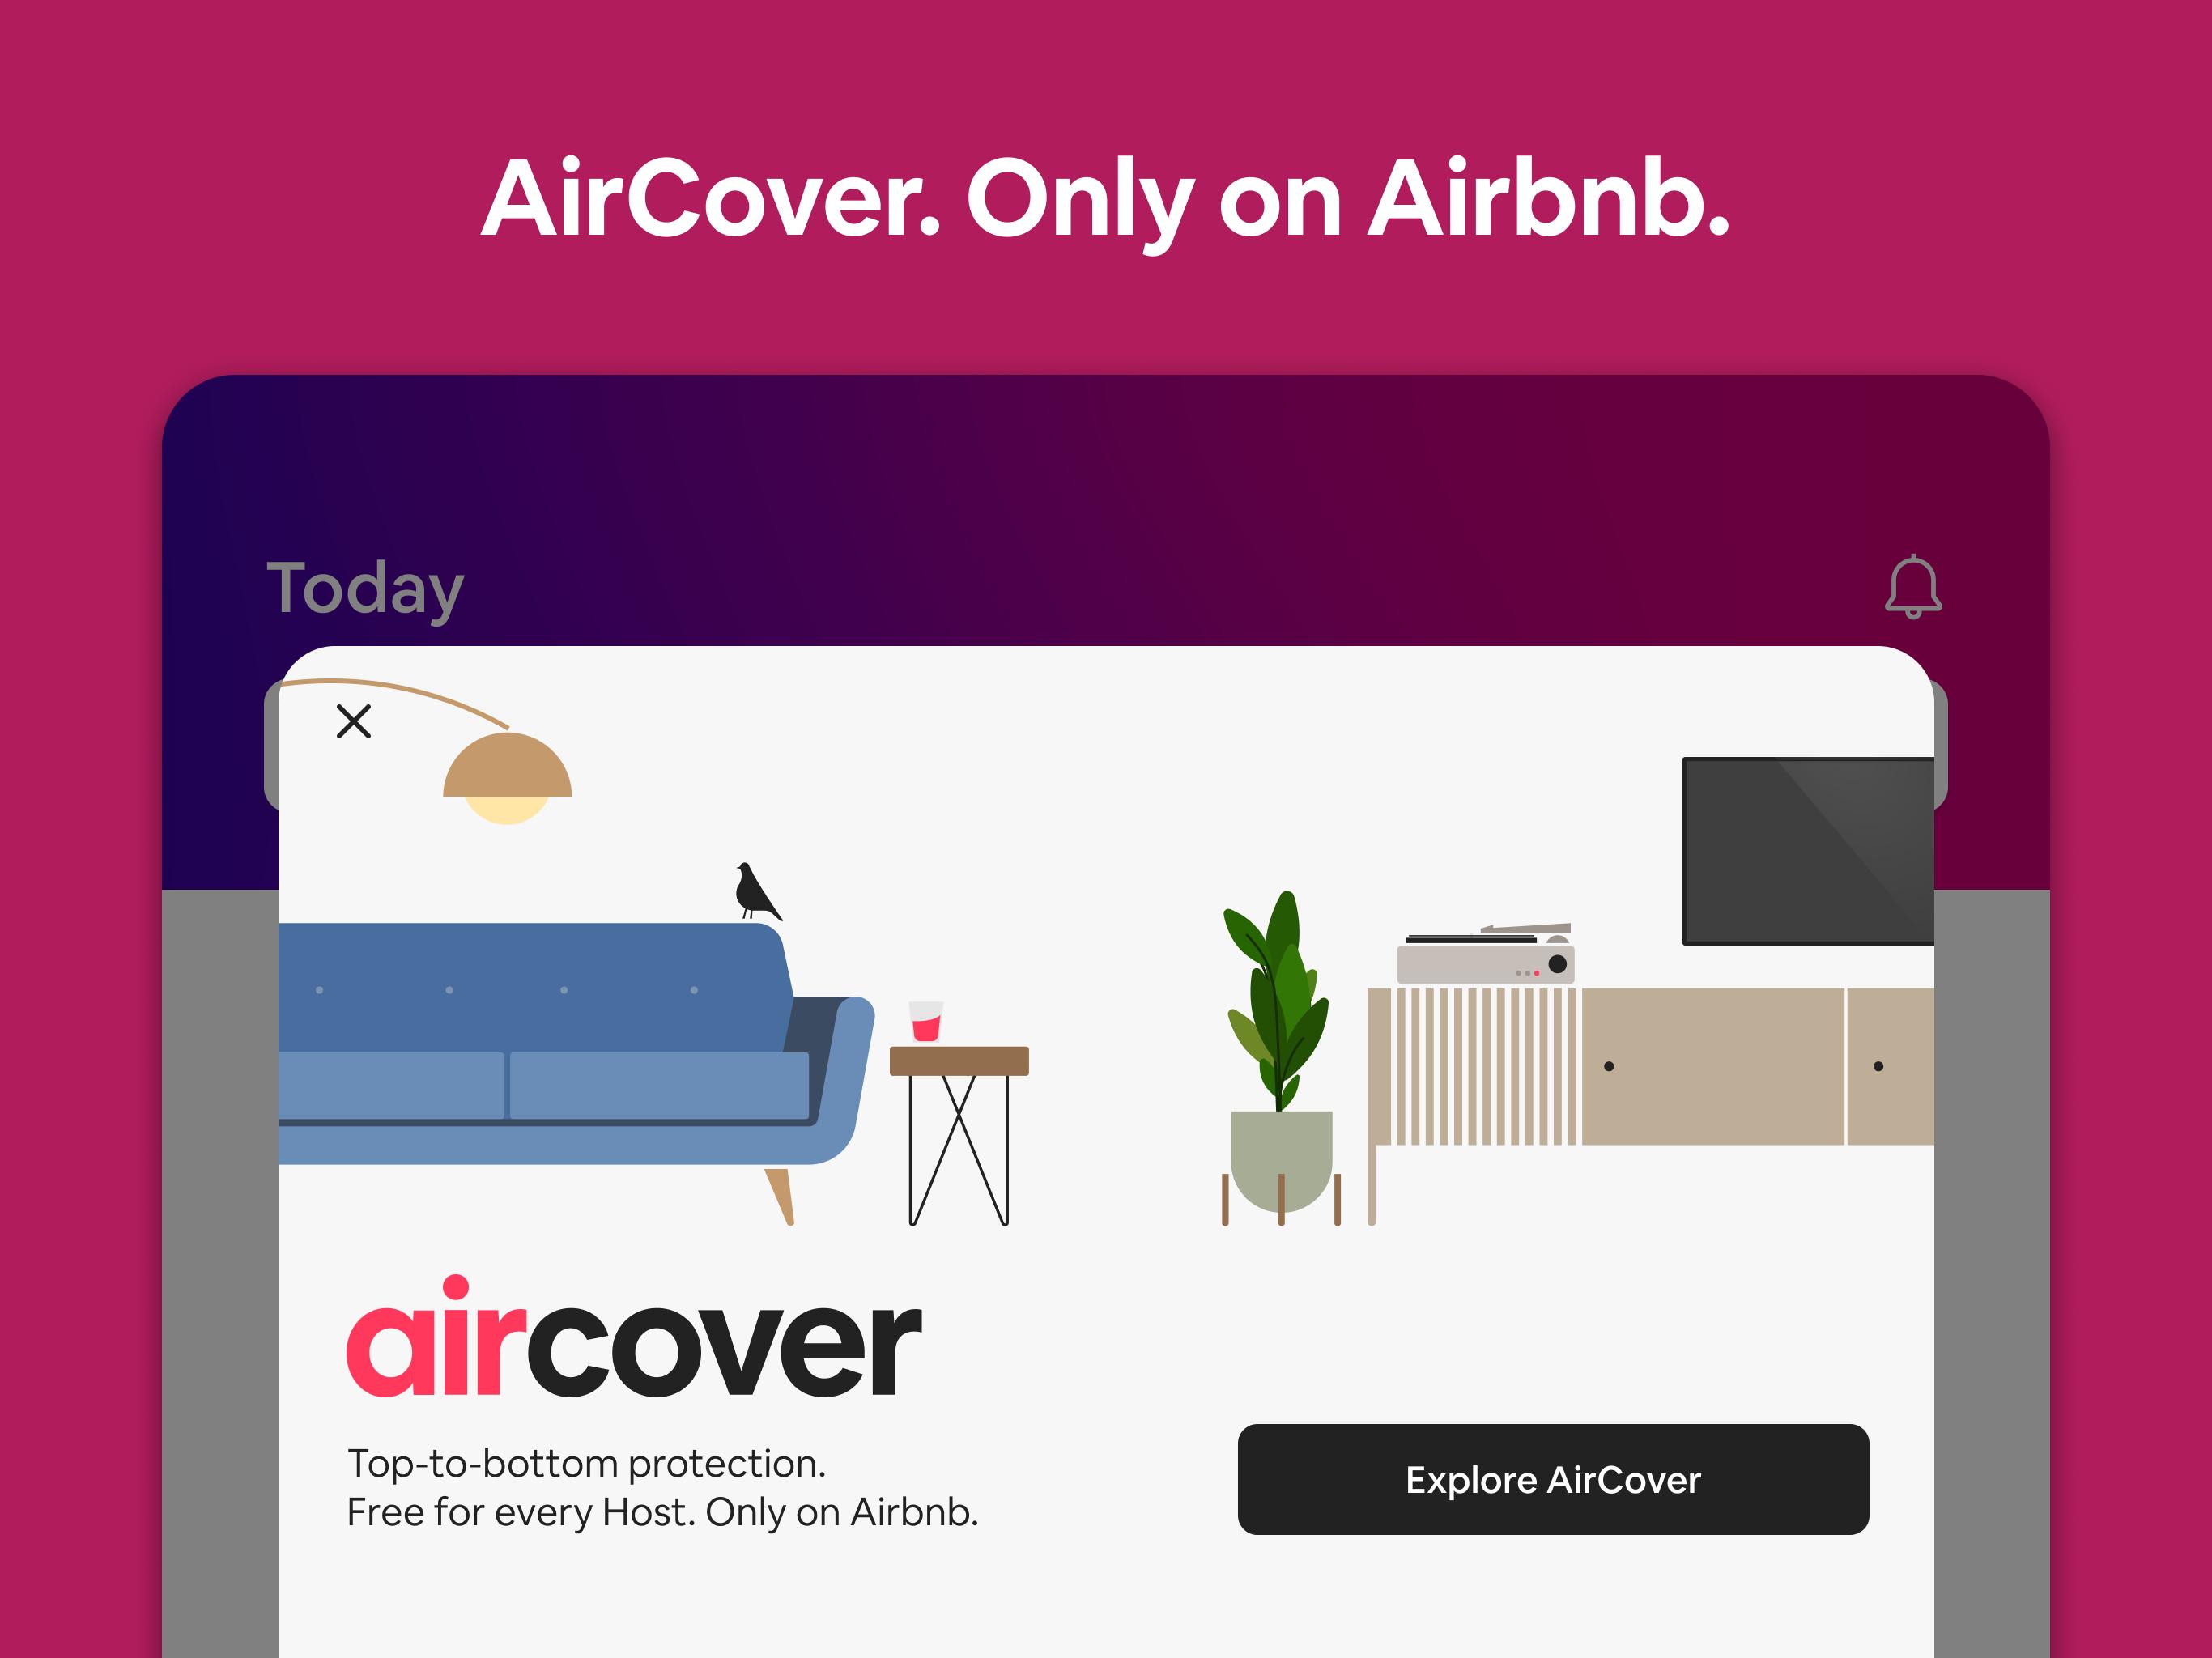 Como funciona airbnb para huespedes